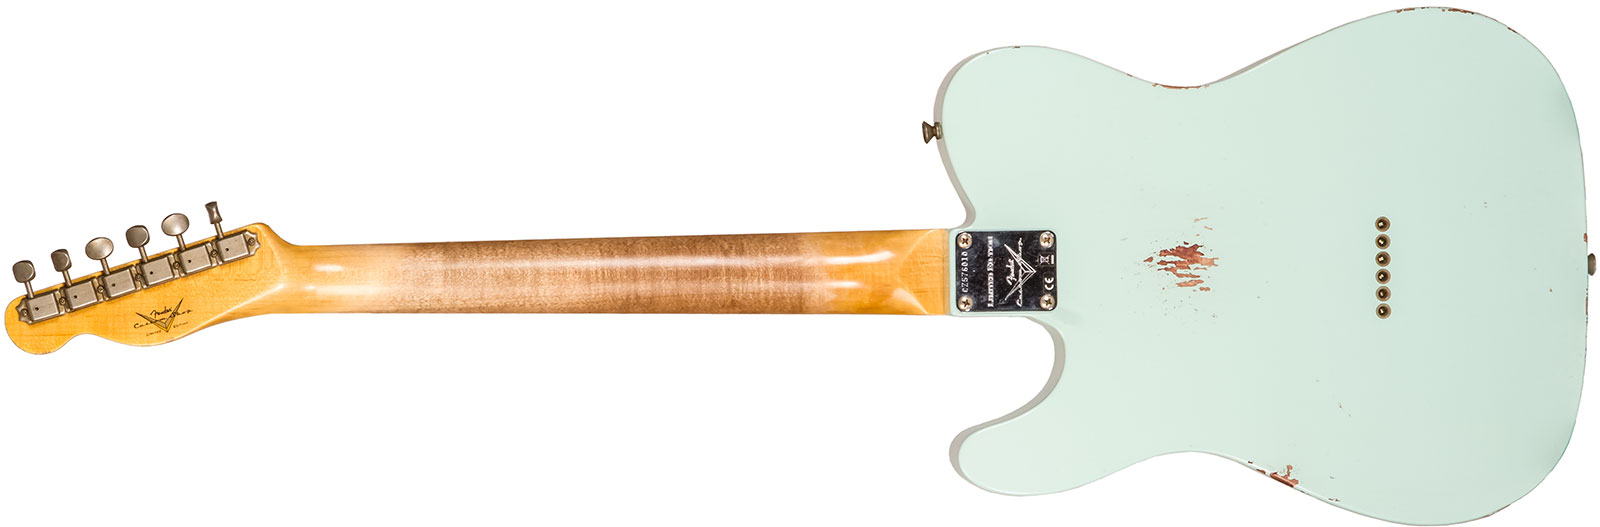 Fender Custom Shop Tele 1961 2s Ht Rw #cz576010 - Relic Aged Surf Green - Televorm elektrische gitaar - Variation 1